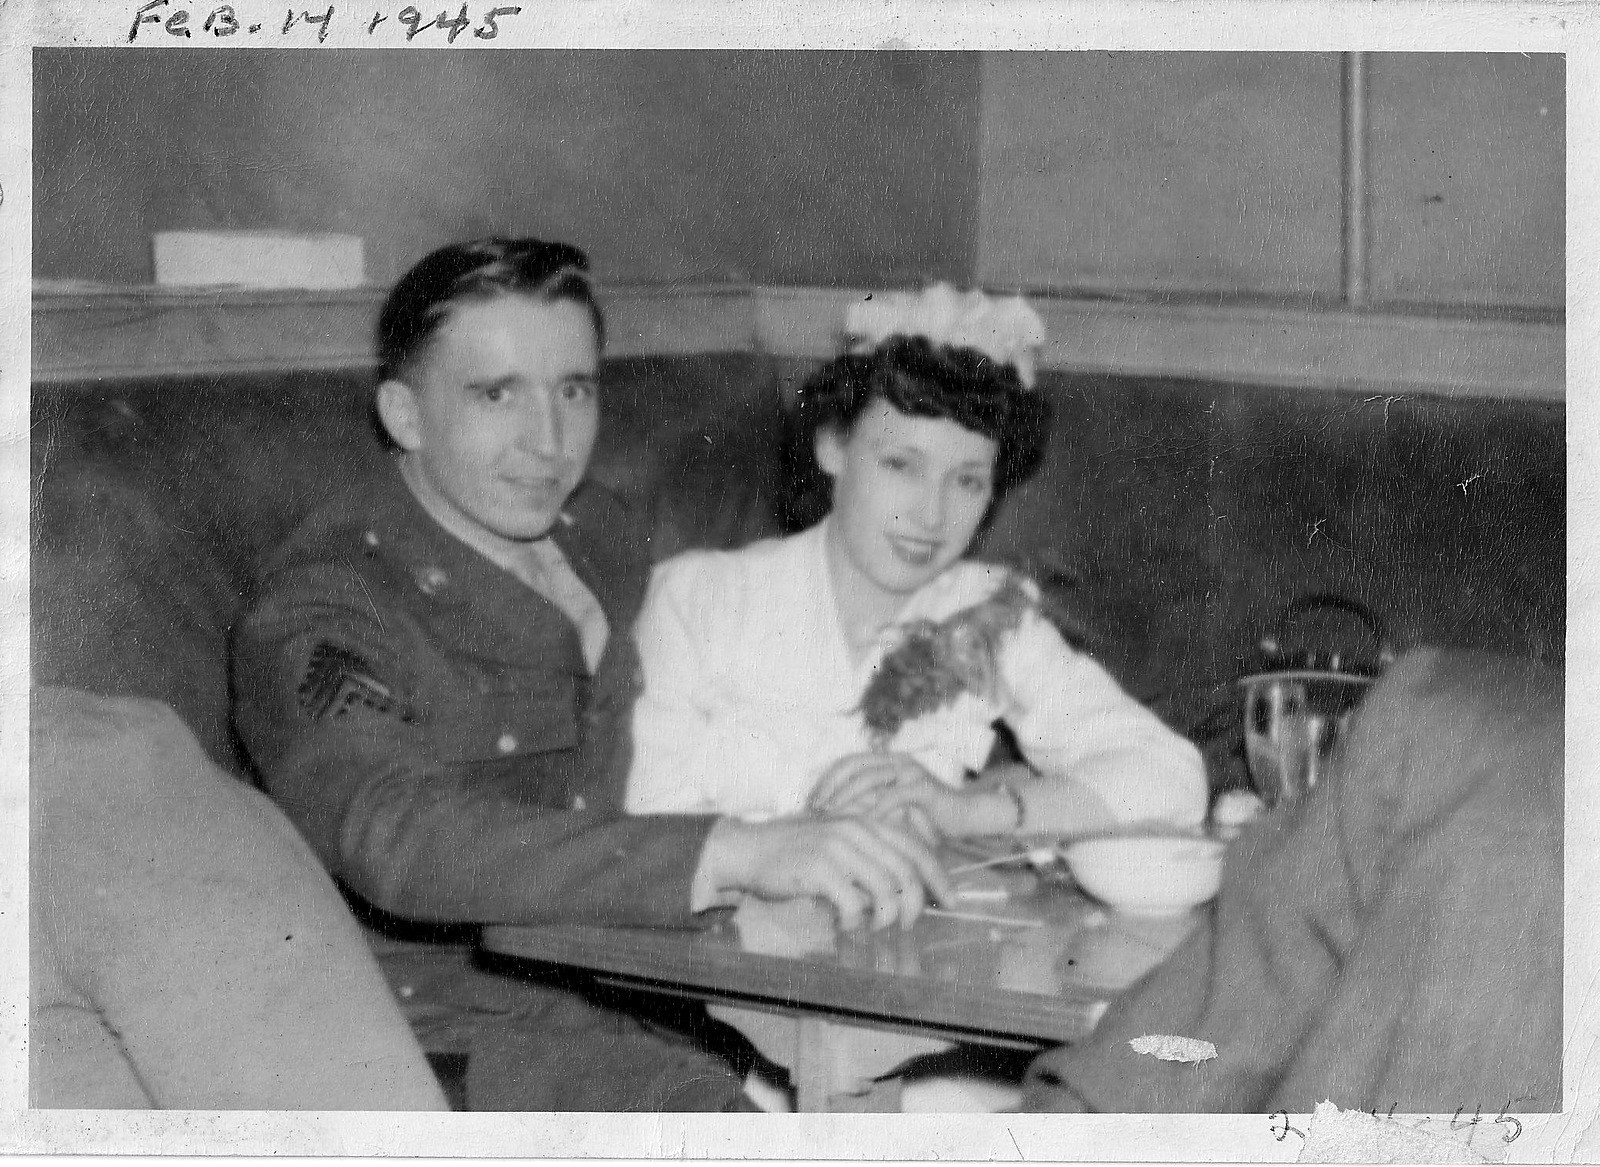 Alexander and Rita Sawetzka February 14, 1945